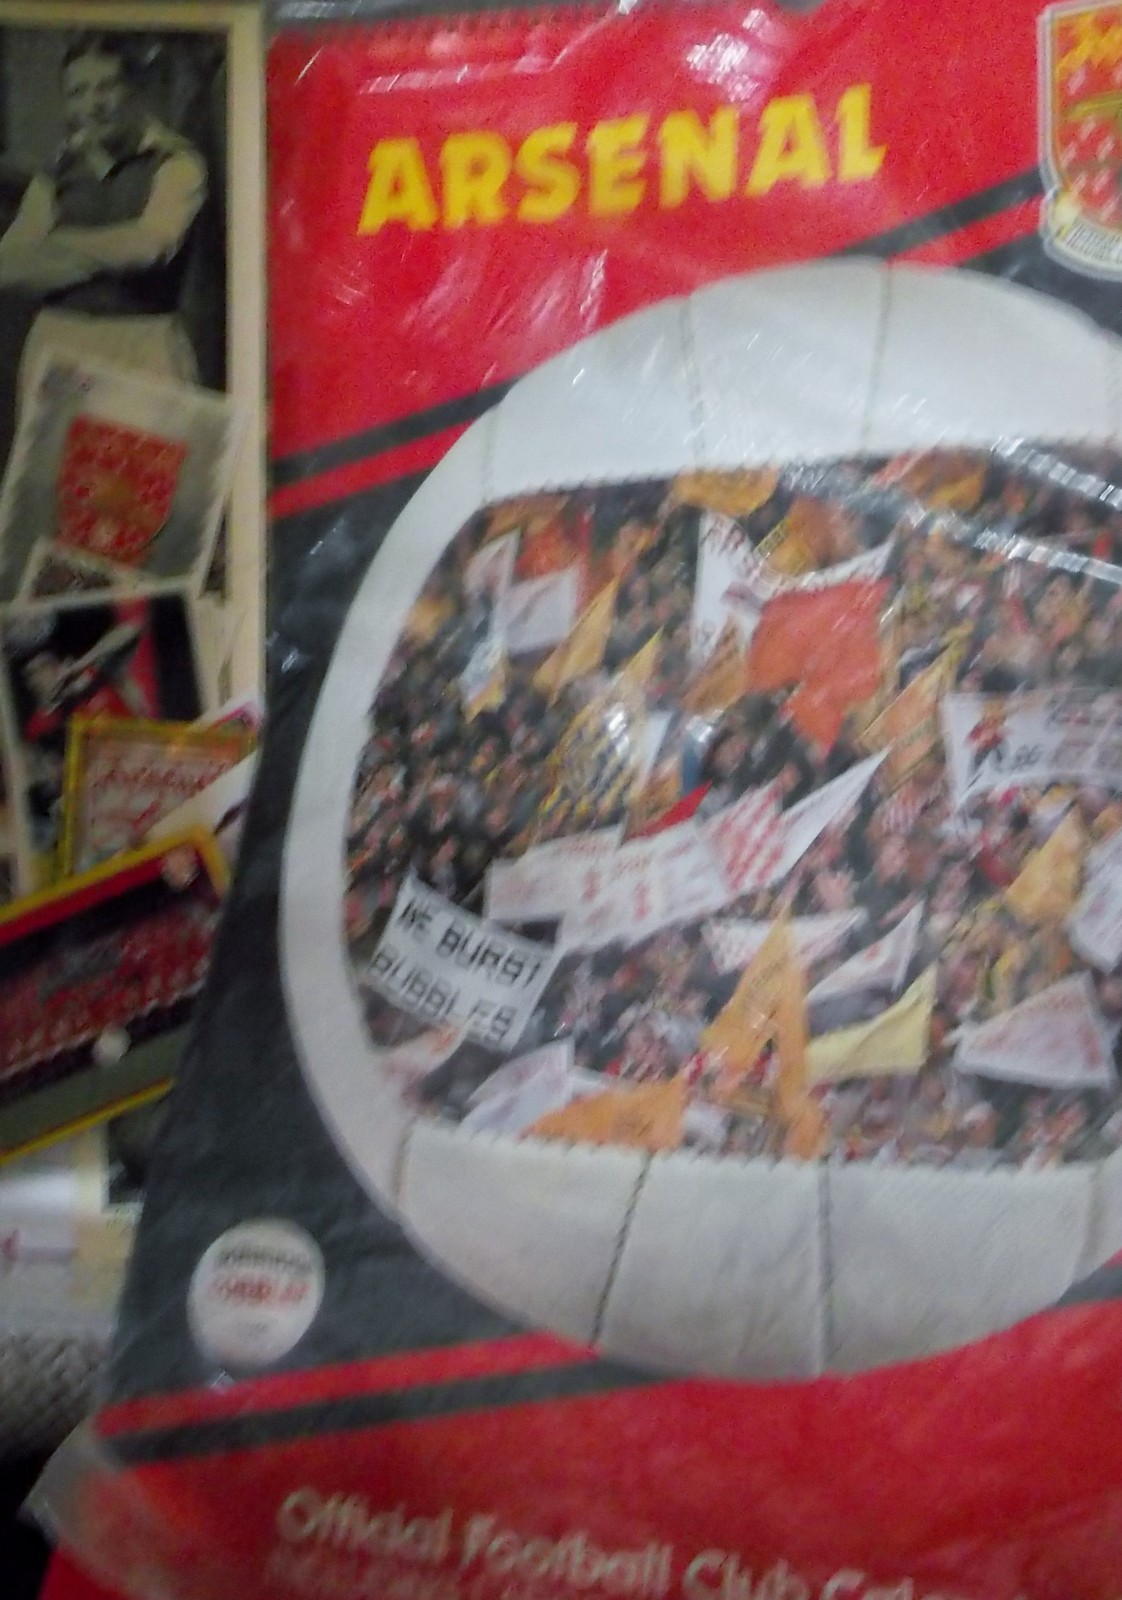 ARSENAL MEMORABILLIA 100+ Items of Arsenal related memorabilia, includes Calendar, Team Sheets,